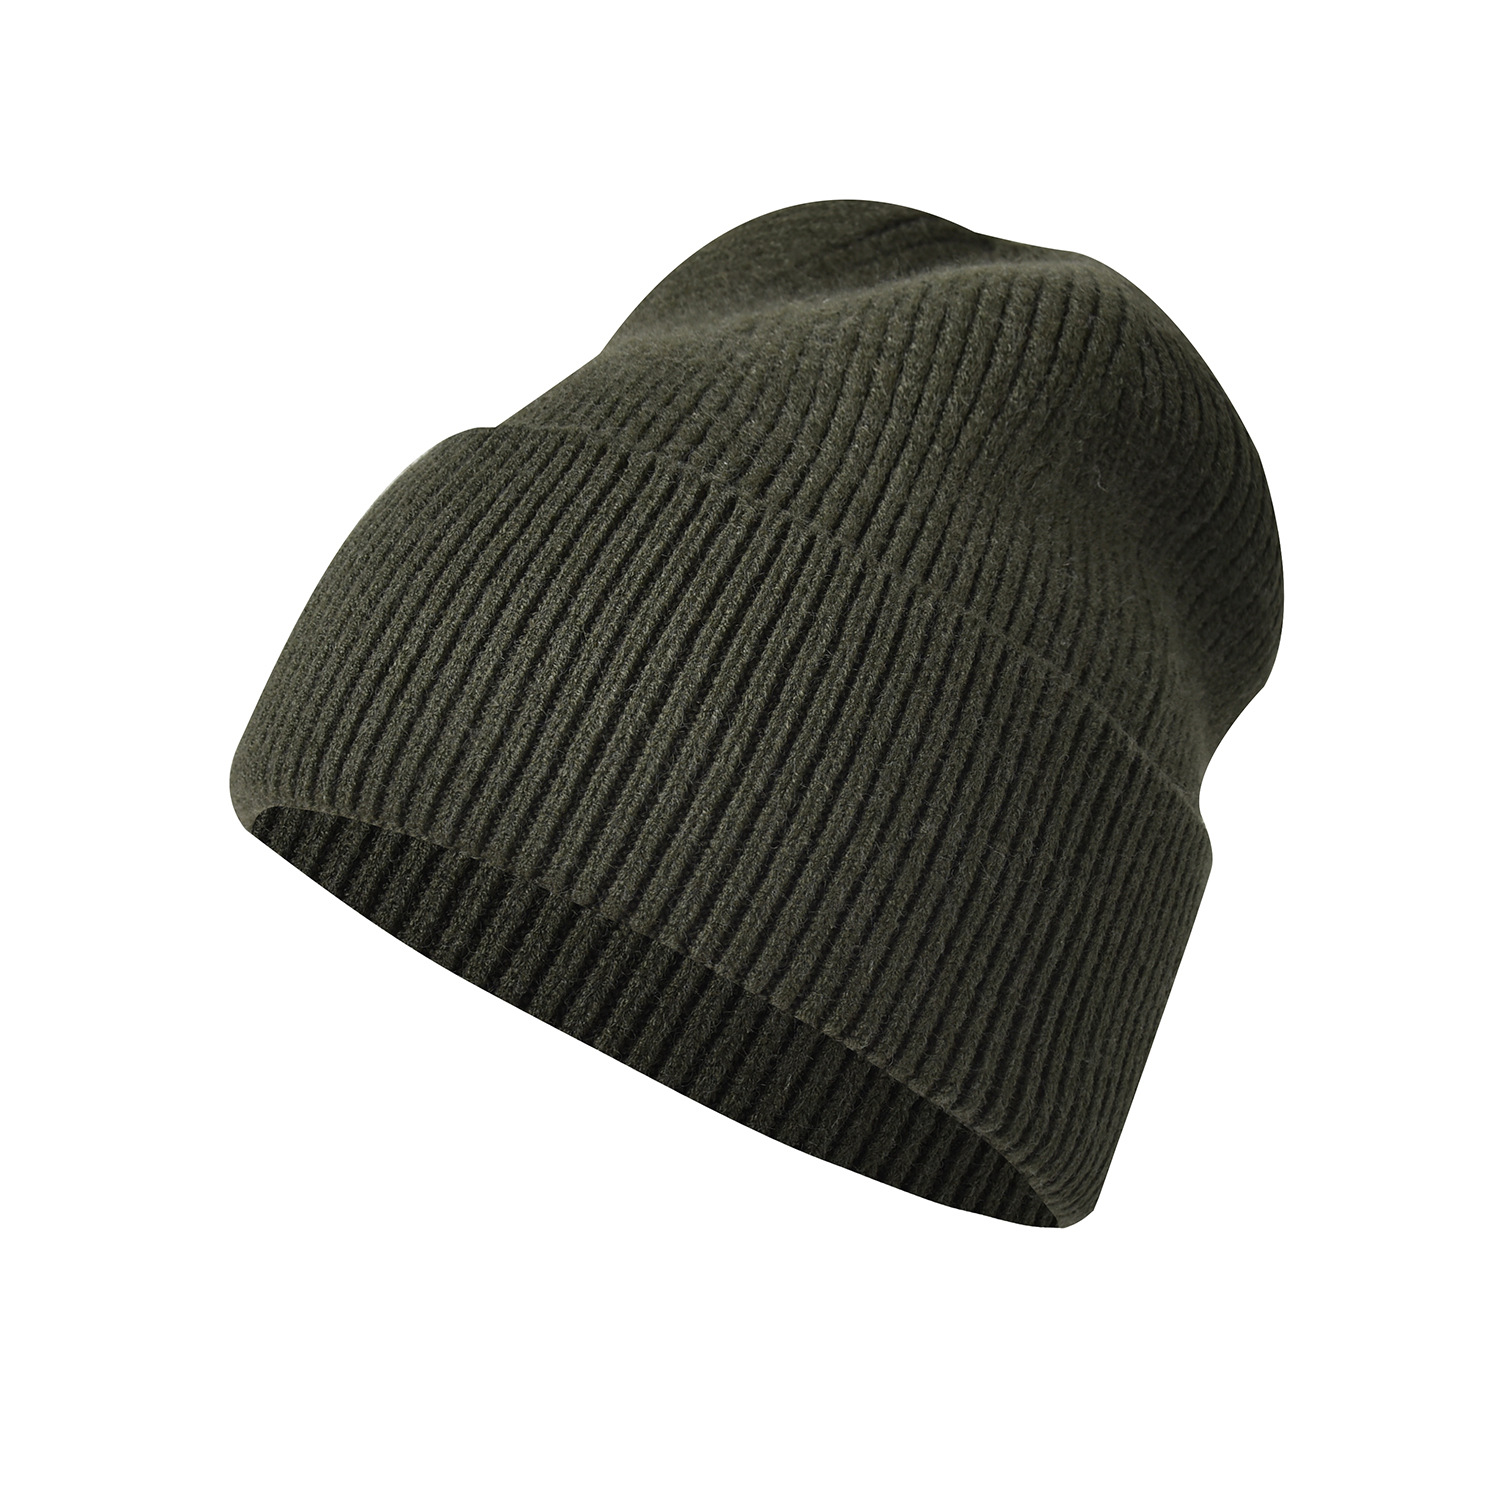 Men's Winter Hat Warm Chic Fleece Knit Cuff Beanie Watch Cap